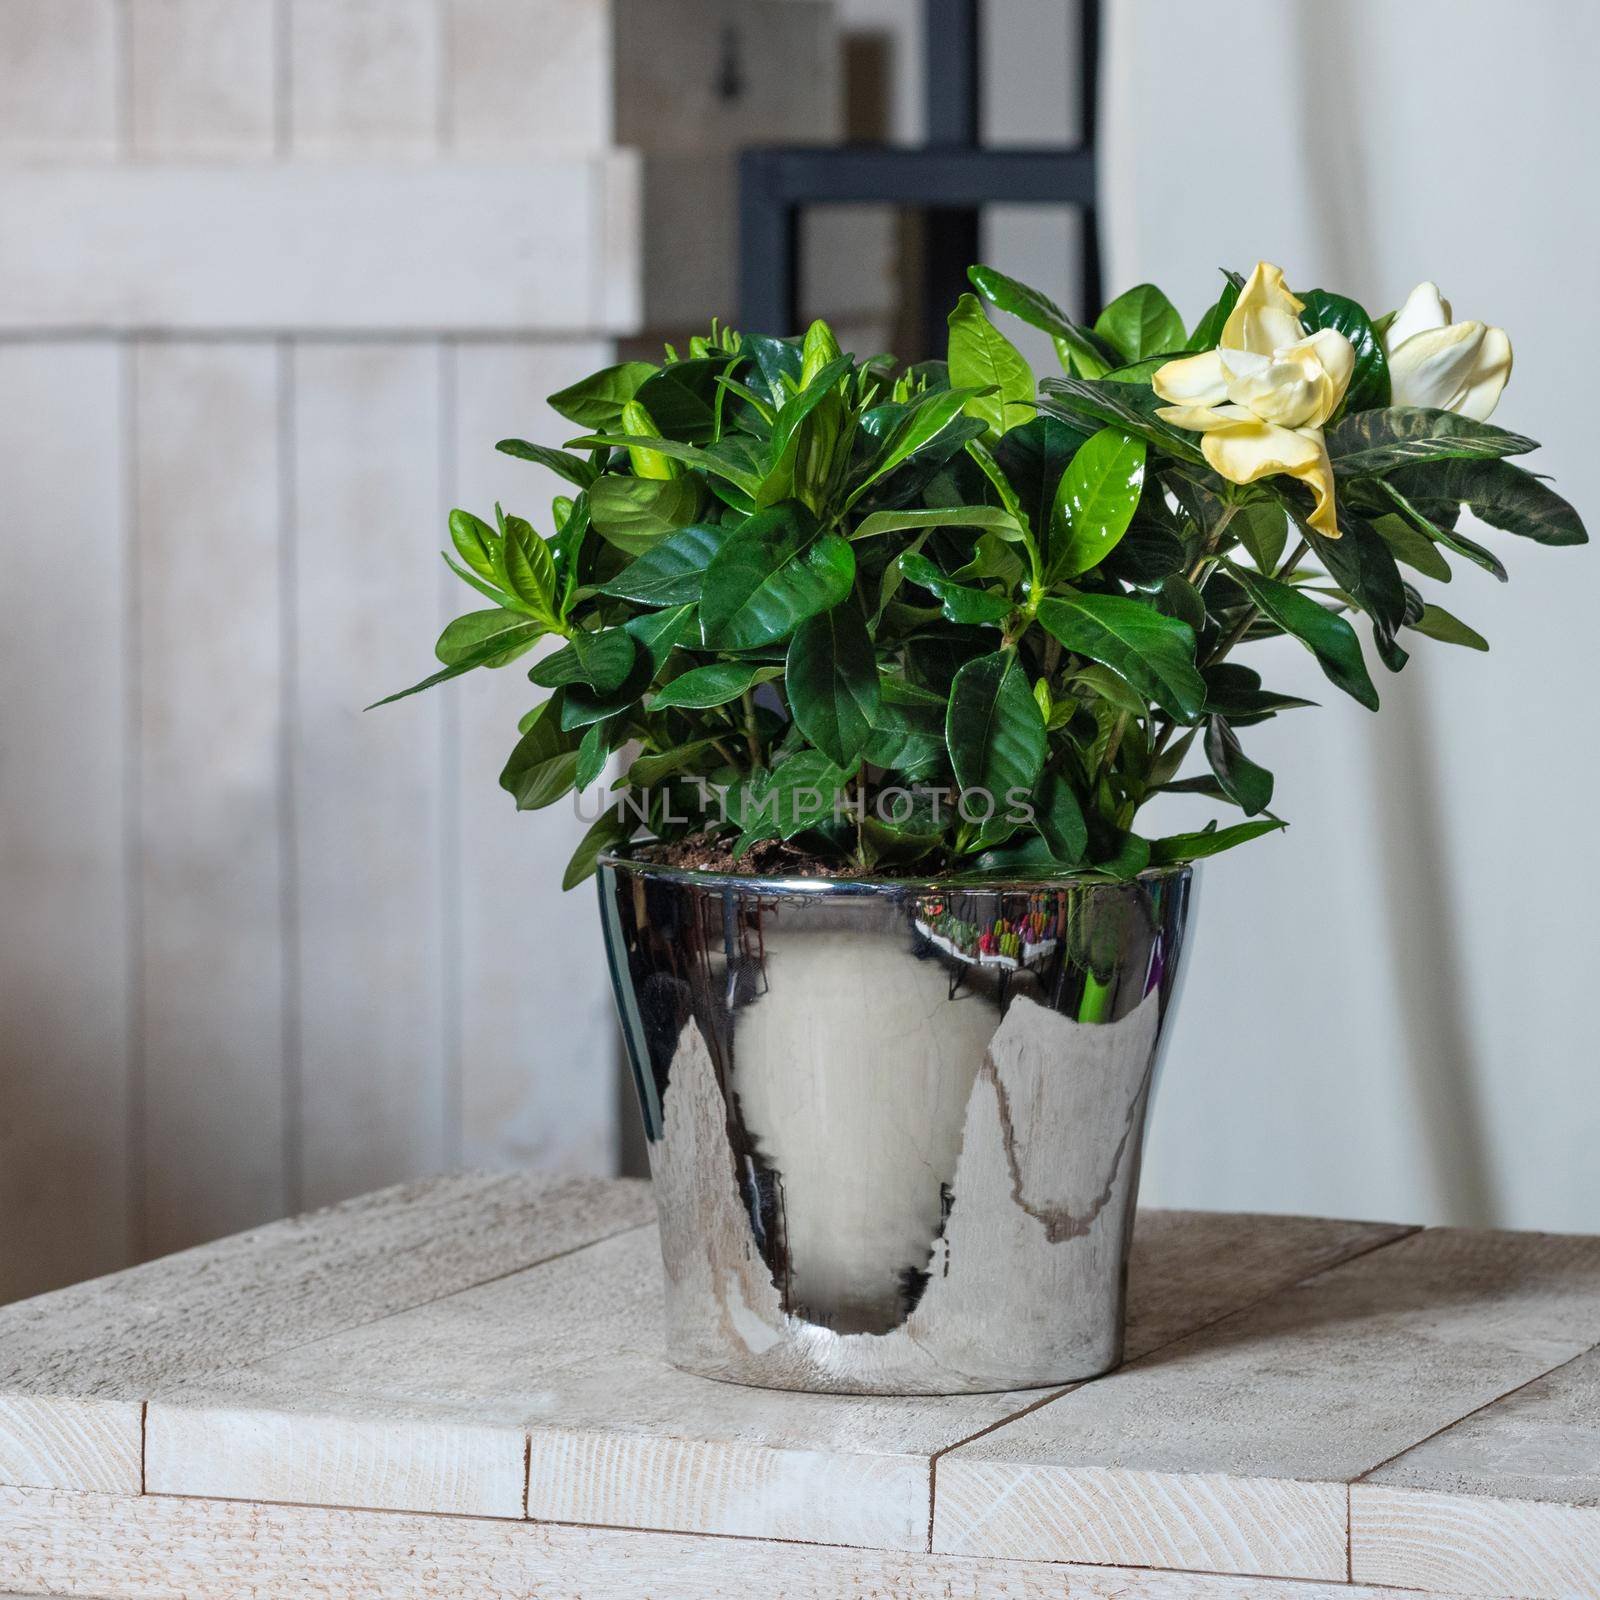 The beautiful Gardenia flower plant in the shiny pot